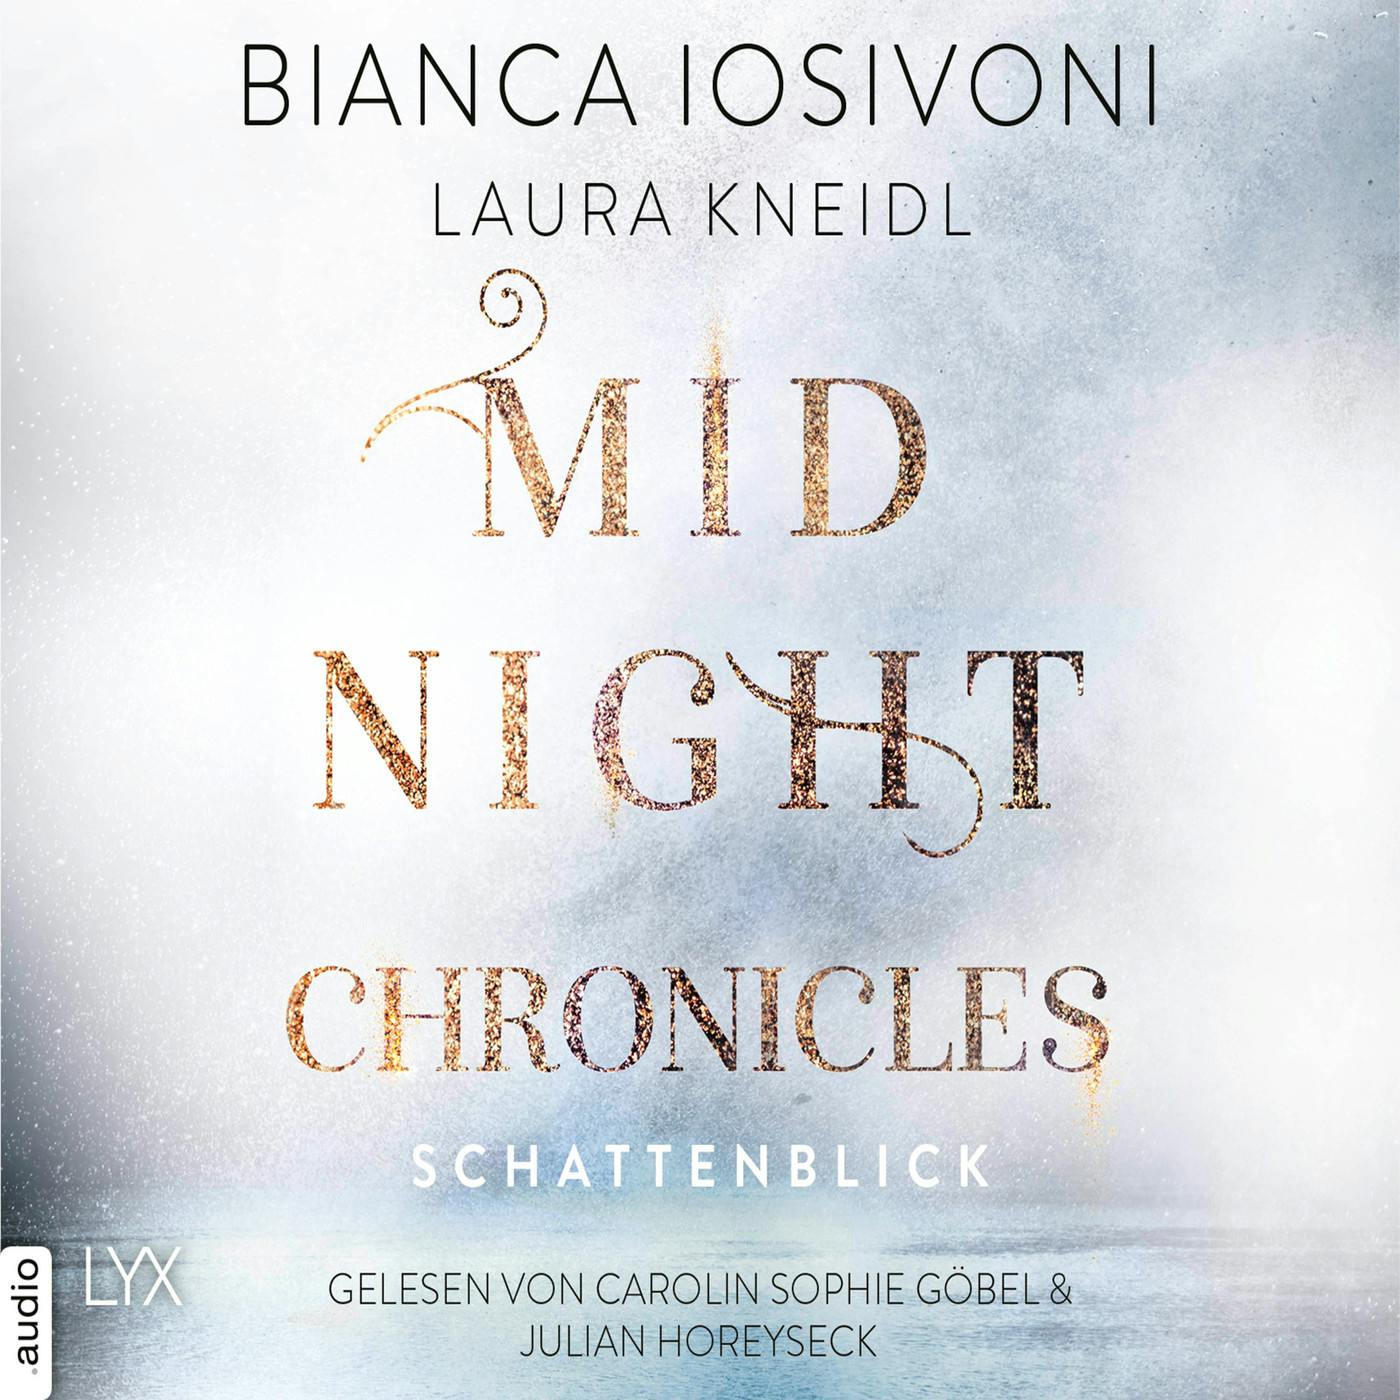 Schattenblick - Midnight-Chronicles-Reihe, Teil 1 (Ungekürzt) - Laura Kneidl, Bianca Iosivoni